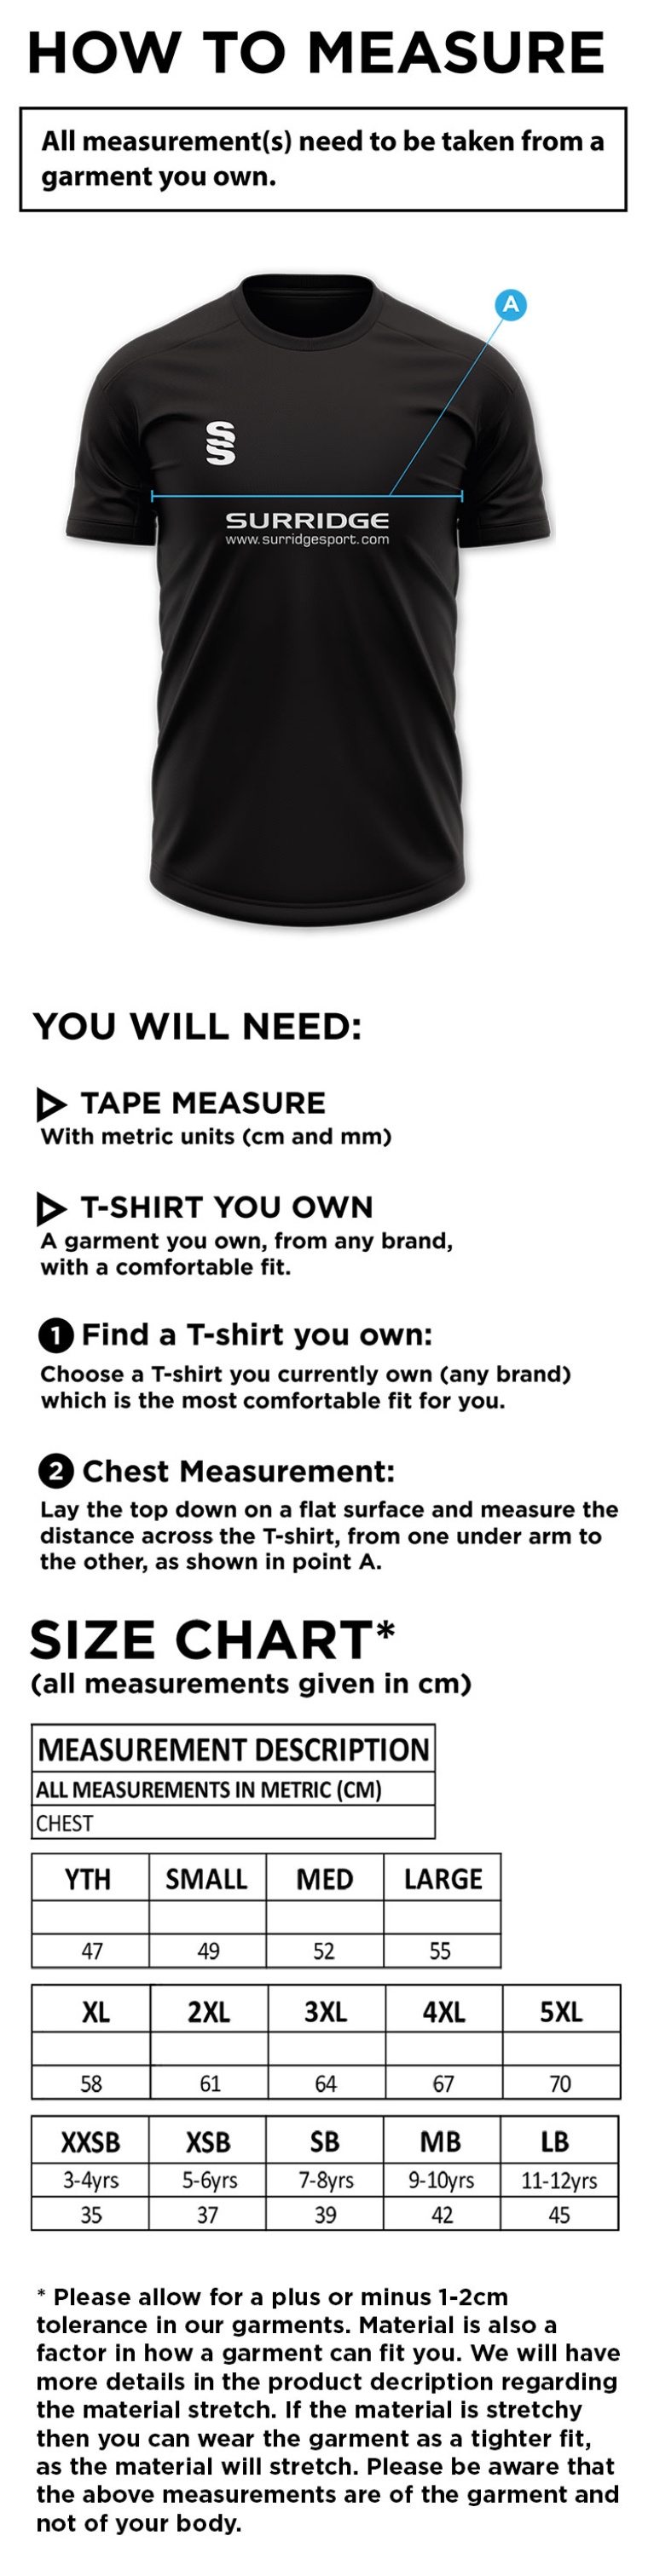 Farncombe CC - Blade Training Shirt - Size Guide